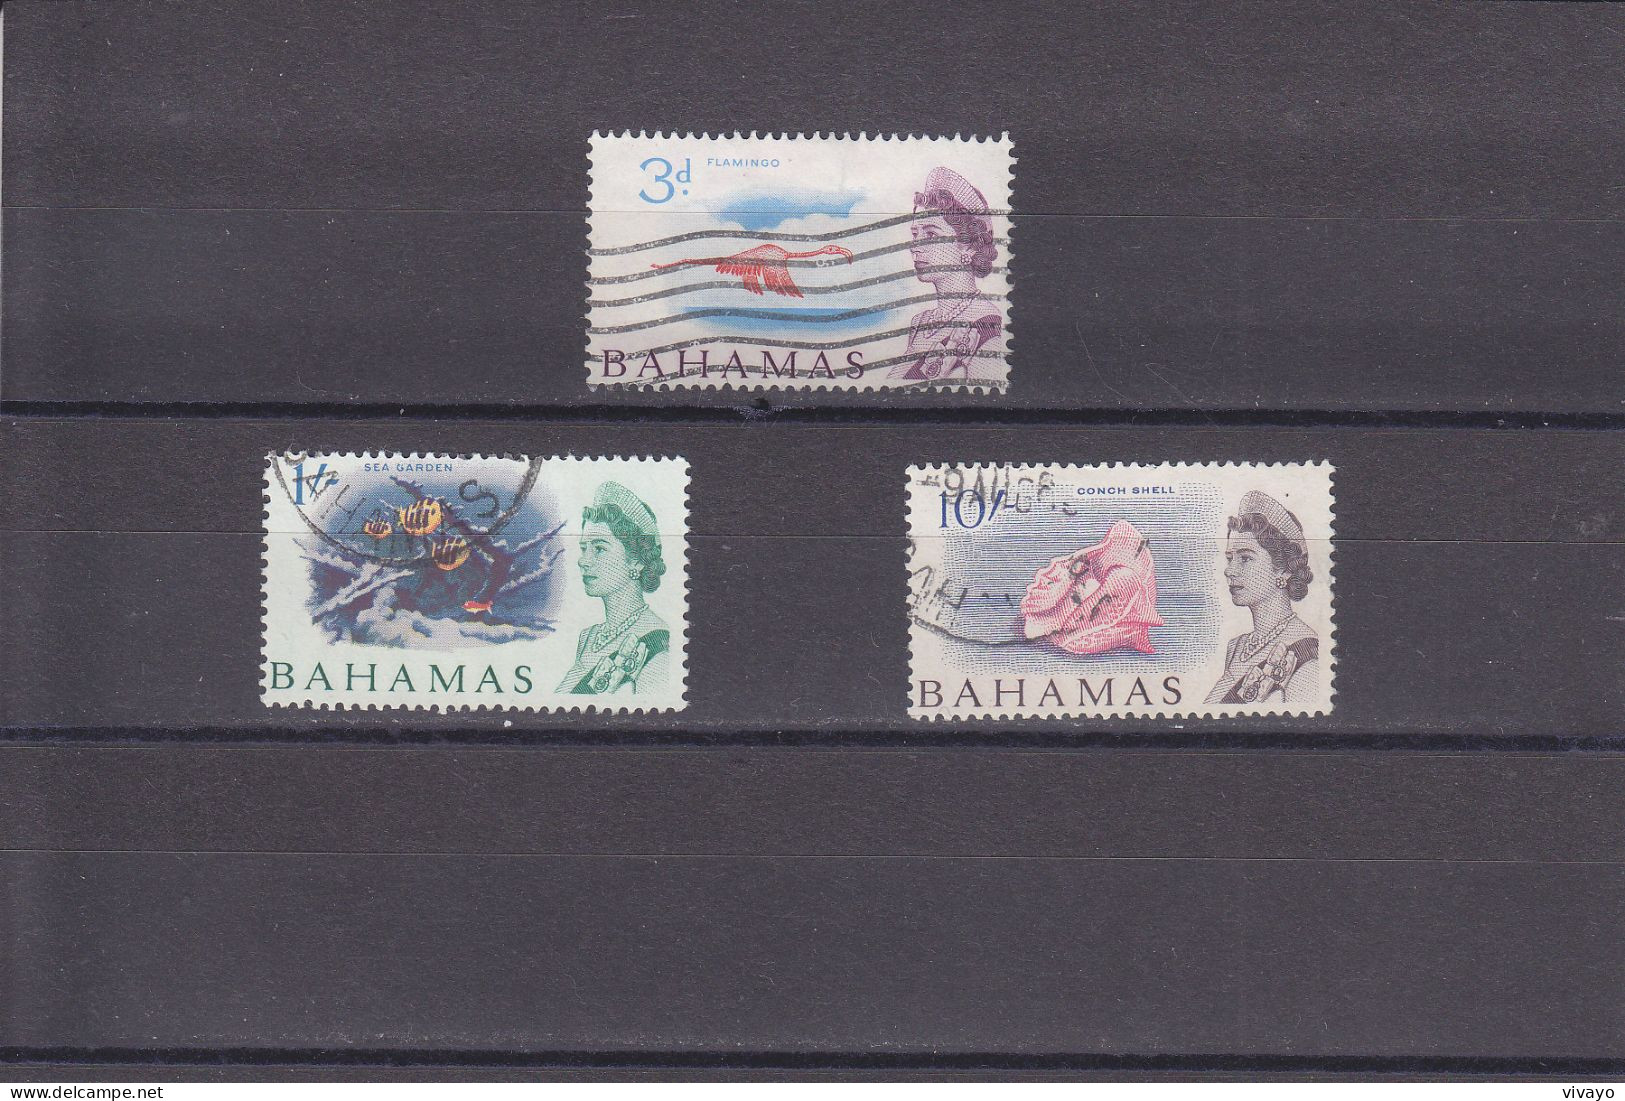 BAHAMAS - 1965 - O/FINE CANCELLED -  QEII & FLAMINGOS, SEA GARDEN, SHELL   Yv. 197, 202, 206   Mi. 213, 218, 222 - 1963-1973 Ministerial Government